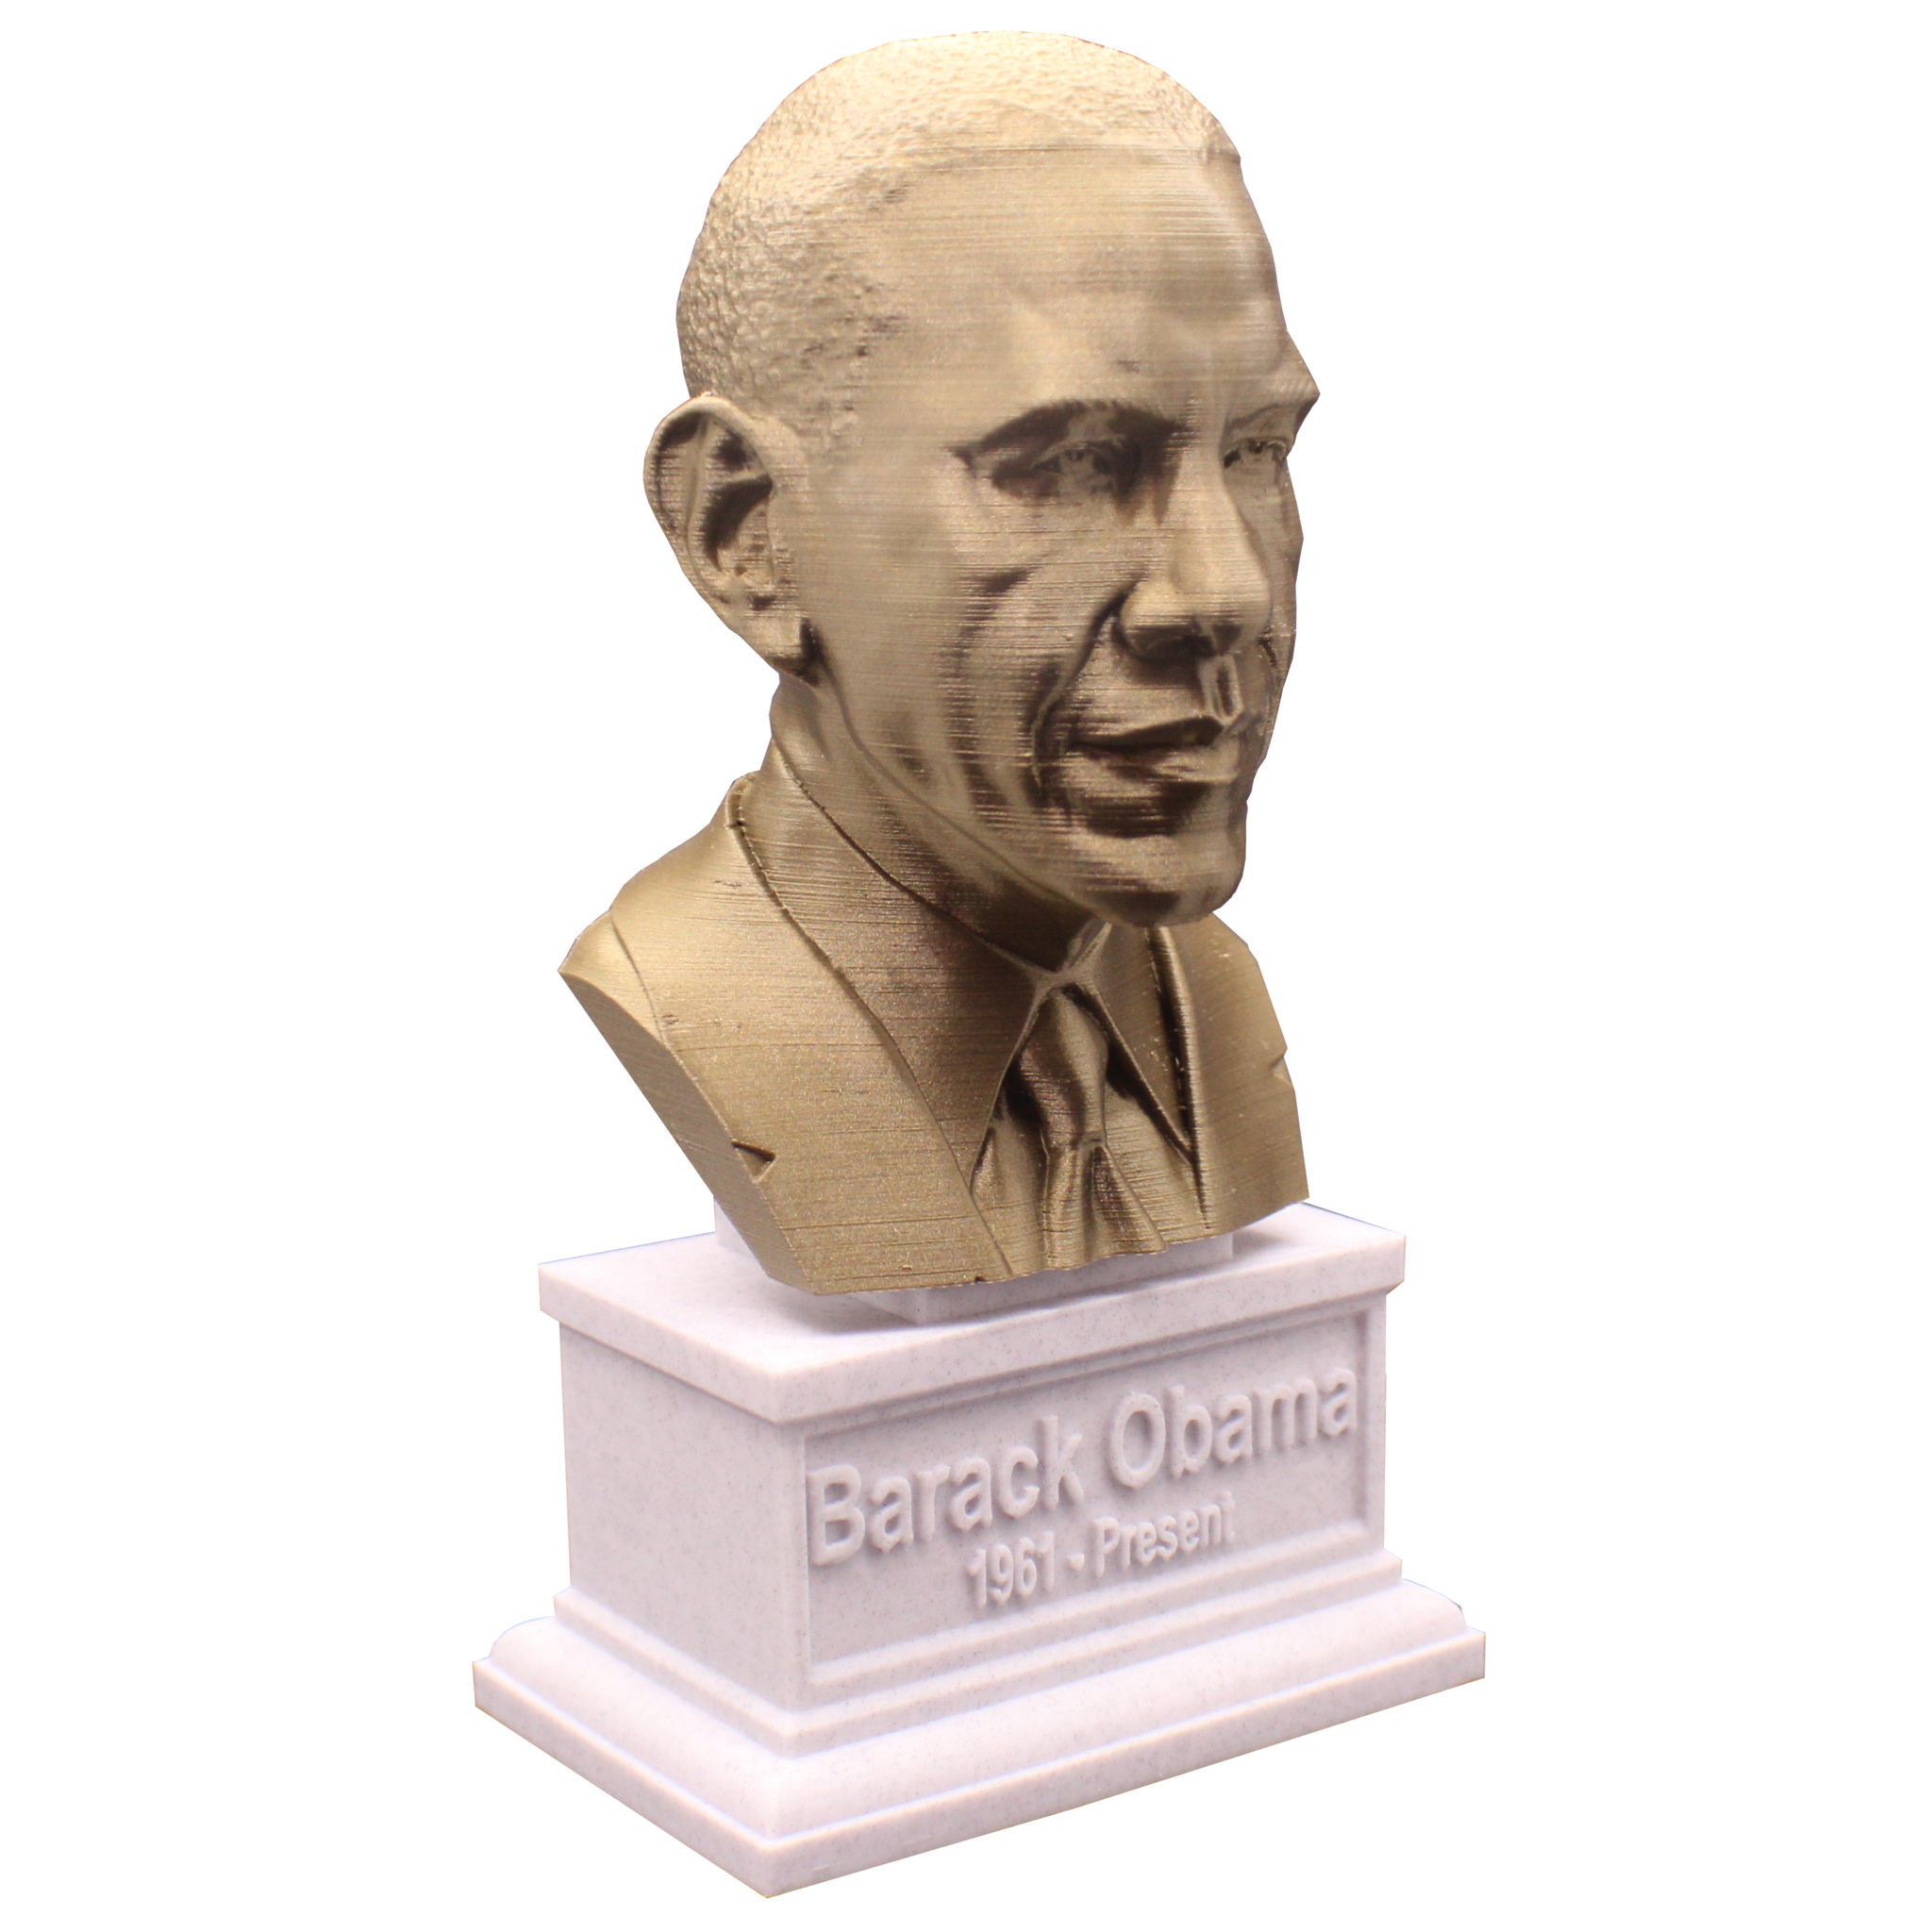 Barack Obama, 44th US President, Sculpture Bust on Box Plinth